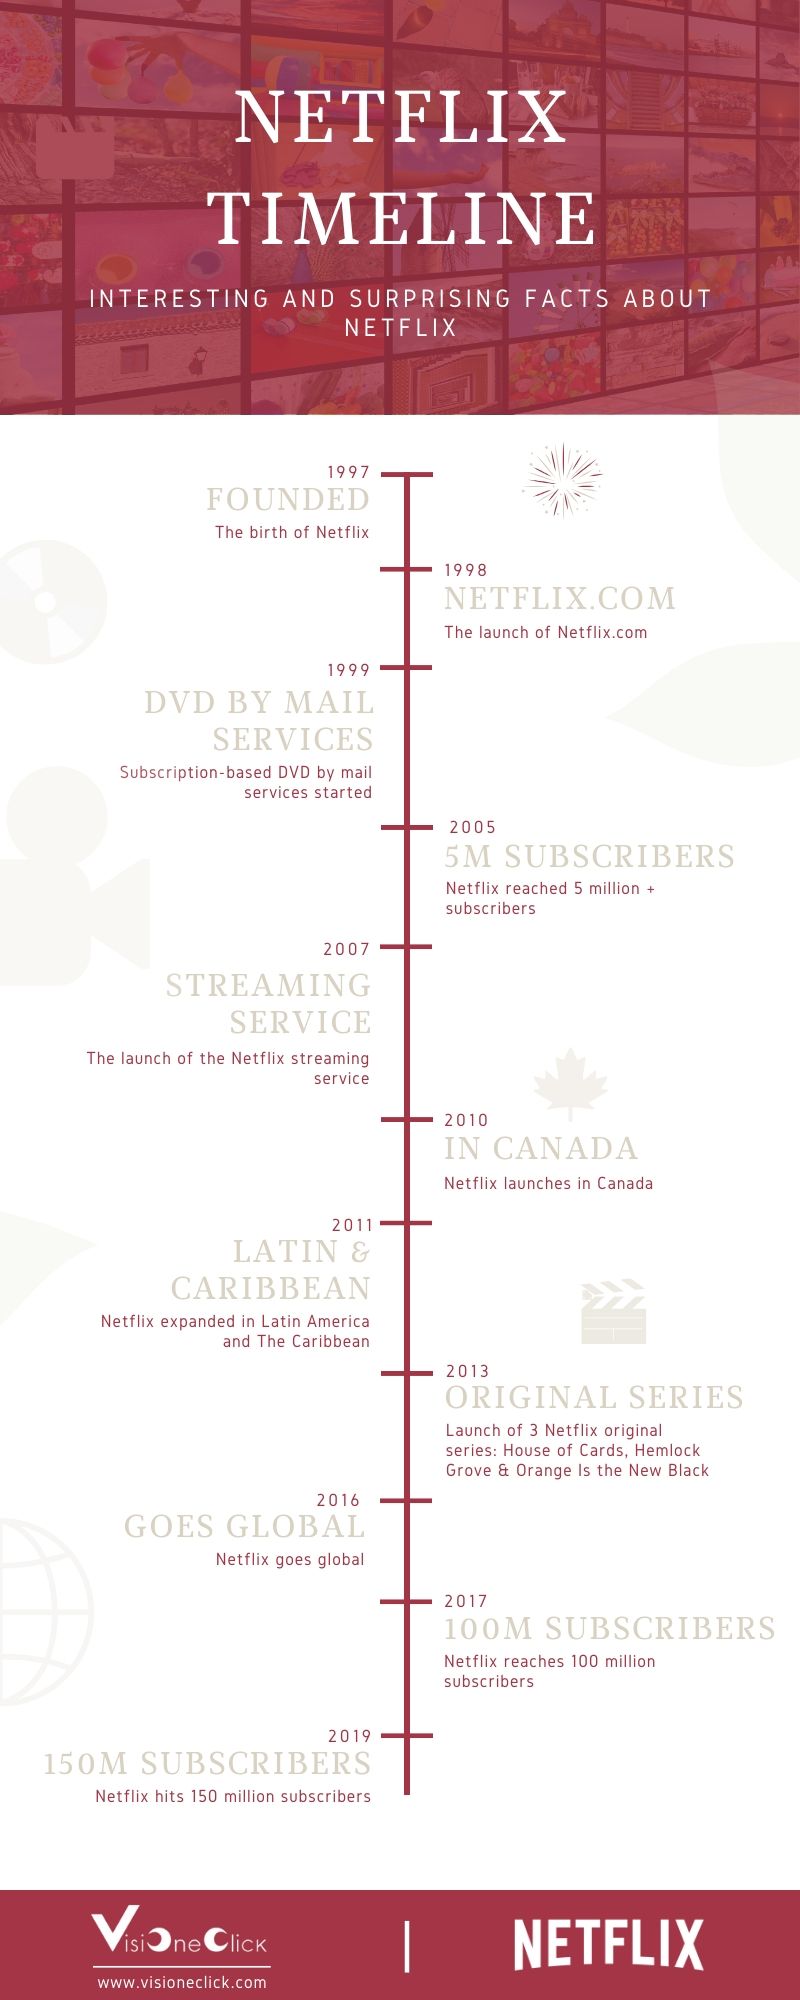 Netflix Timeline